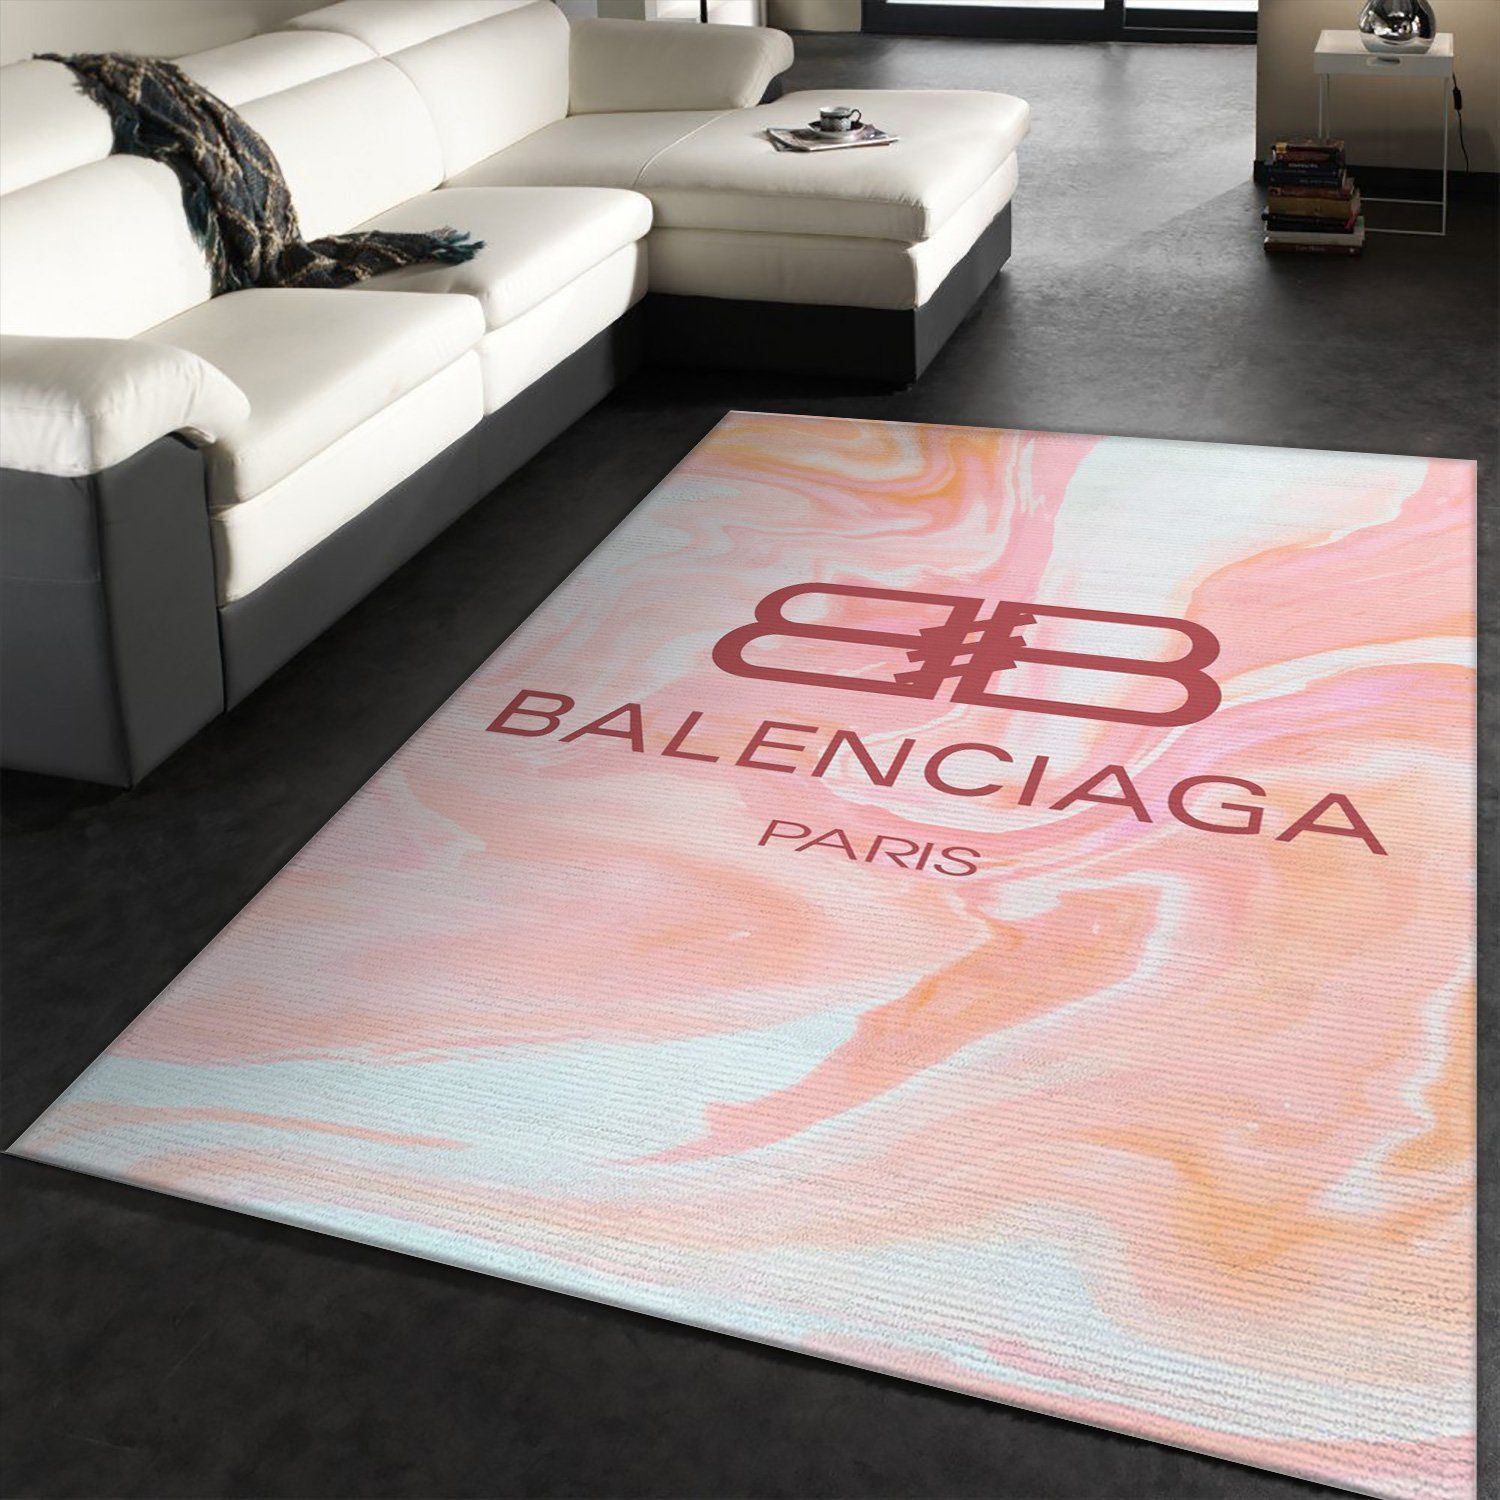 Balenciaga Paris Pinky Rectangle Rug Area Carpet Door Mat Fashion Brand Home Decor Luxury